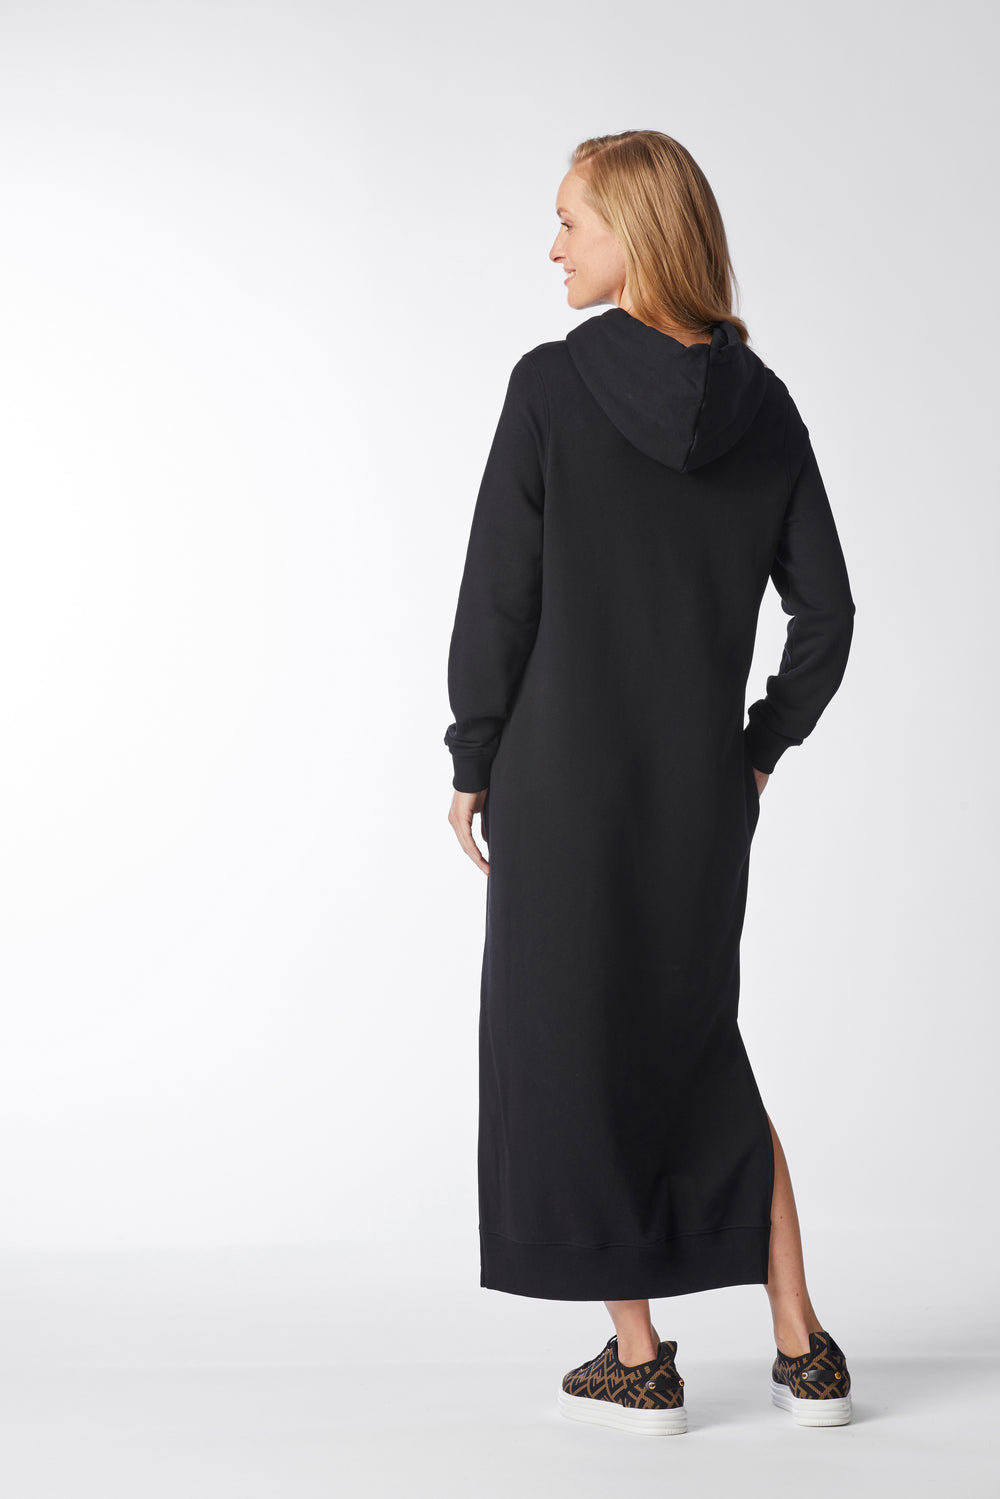 RICH&ROYAL Hoodie Dress black 2109-672